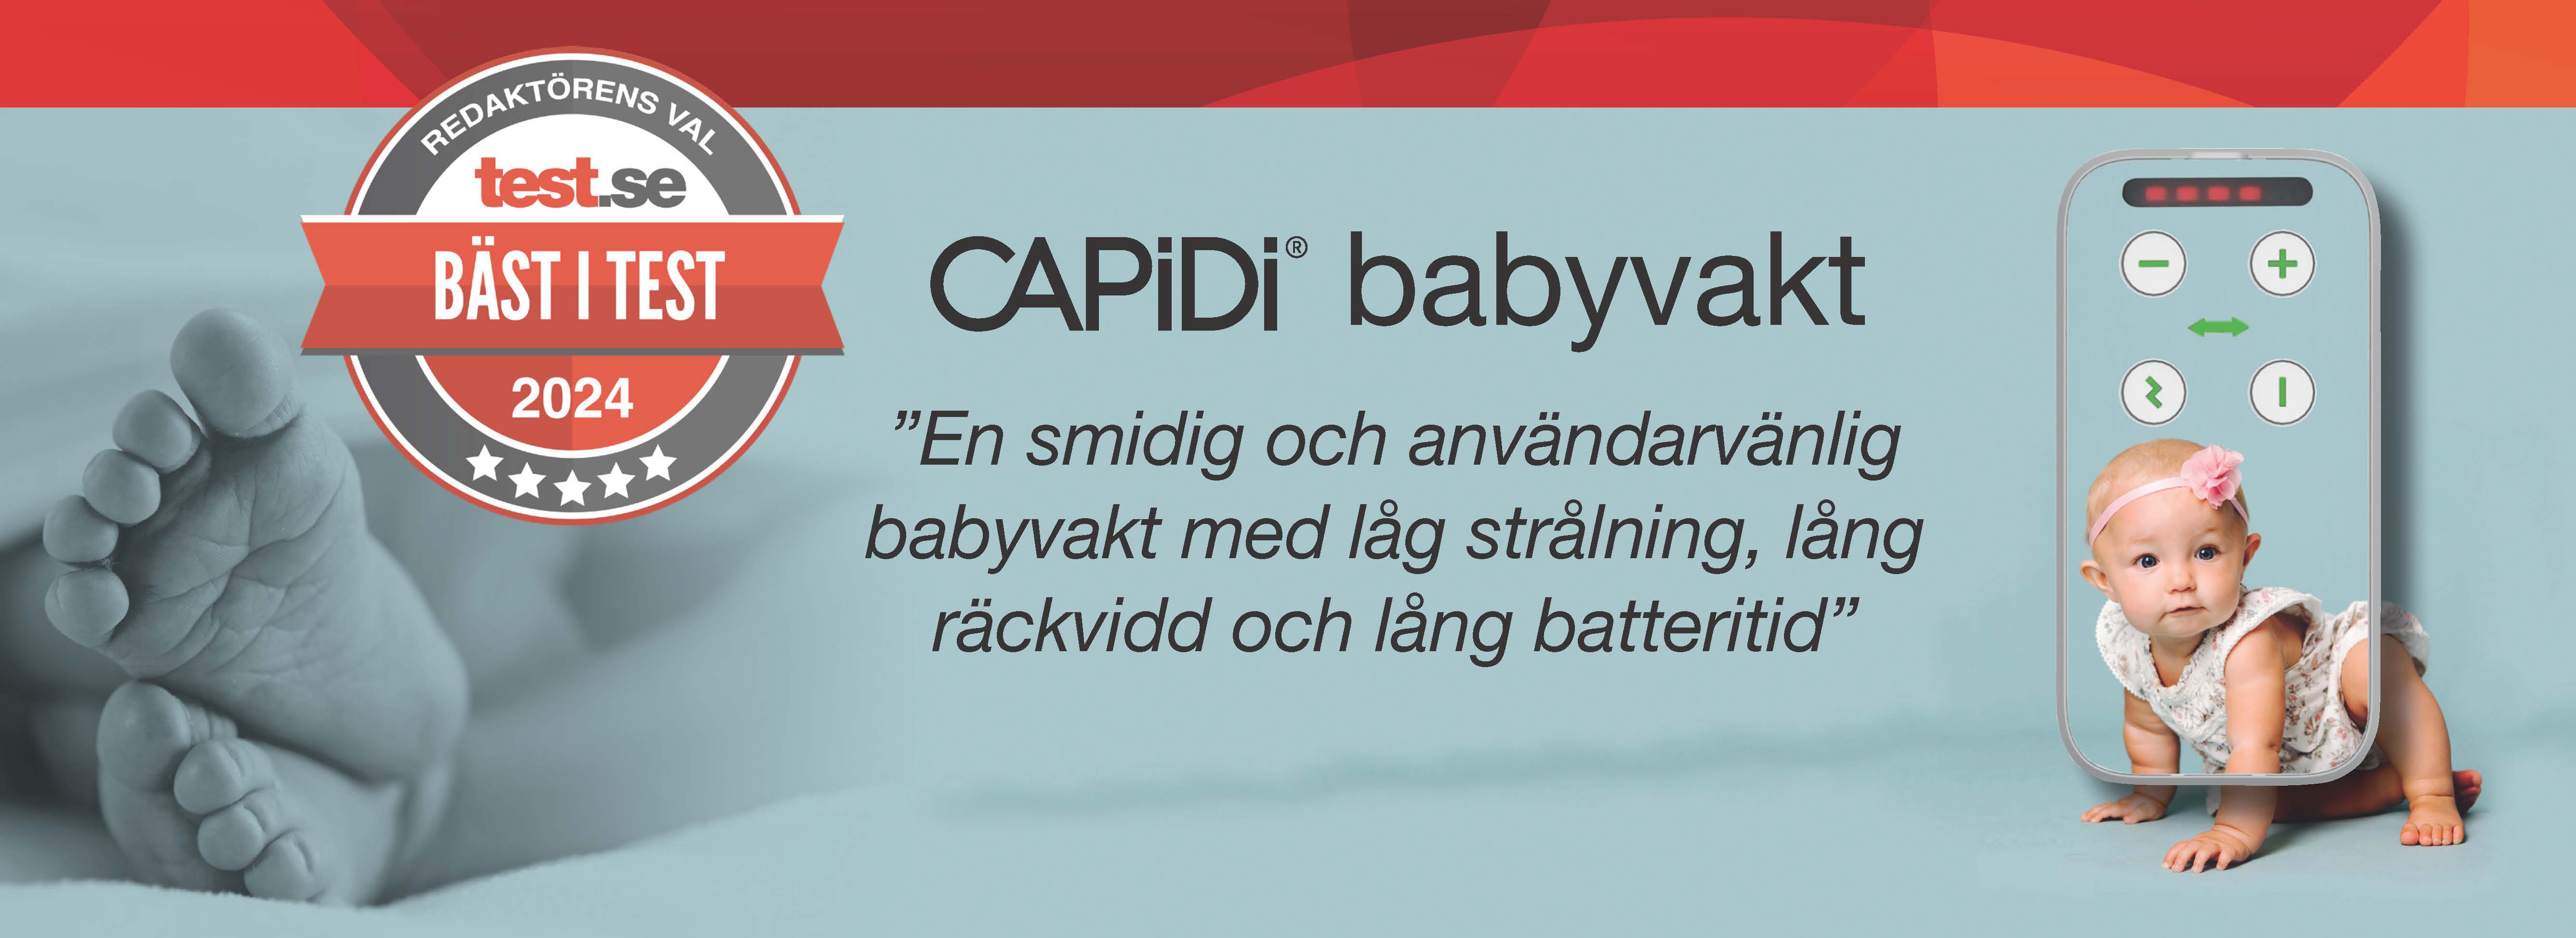 CAPiDi-header-1920x700_SE.jpg